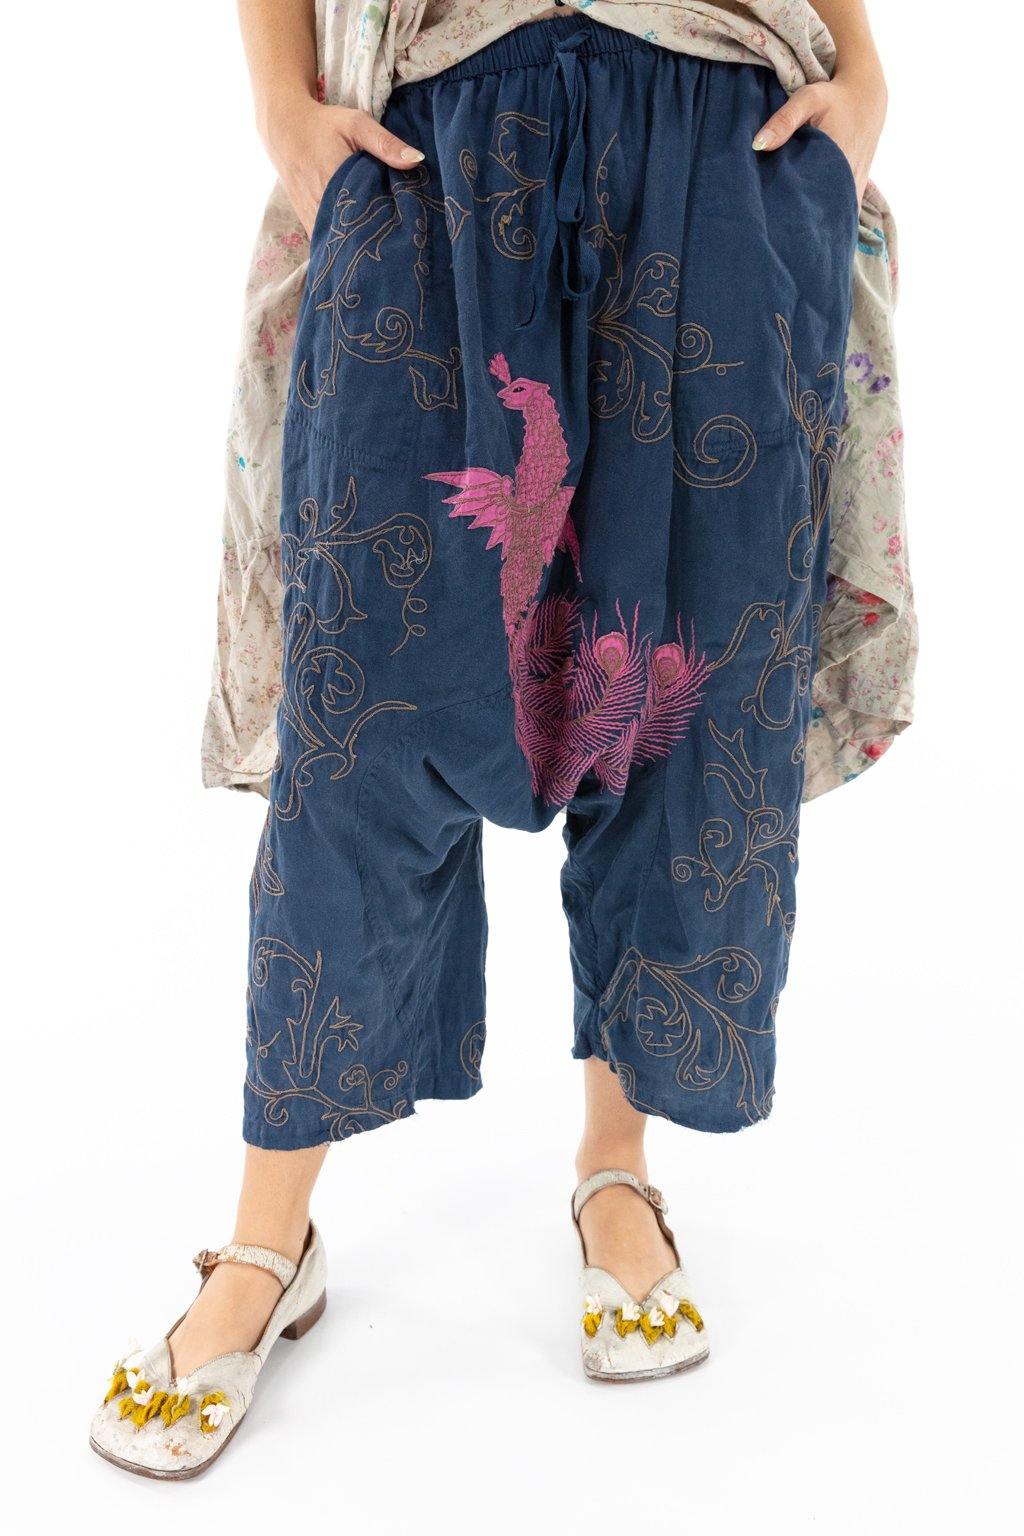 Dragon Garcon Trousers - Magnolia Pearl Clothing